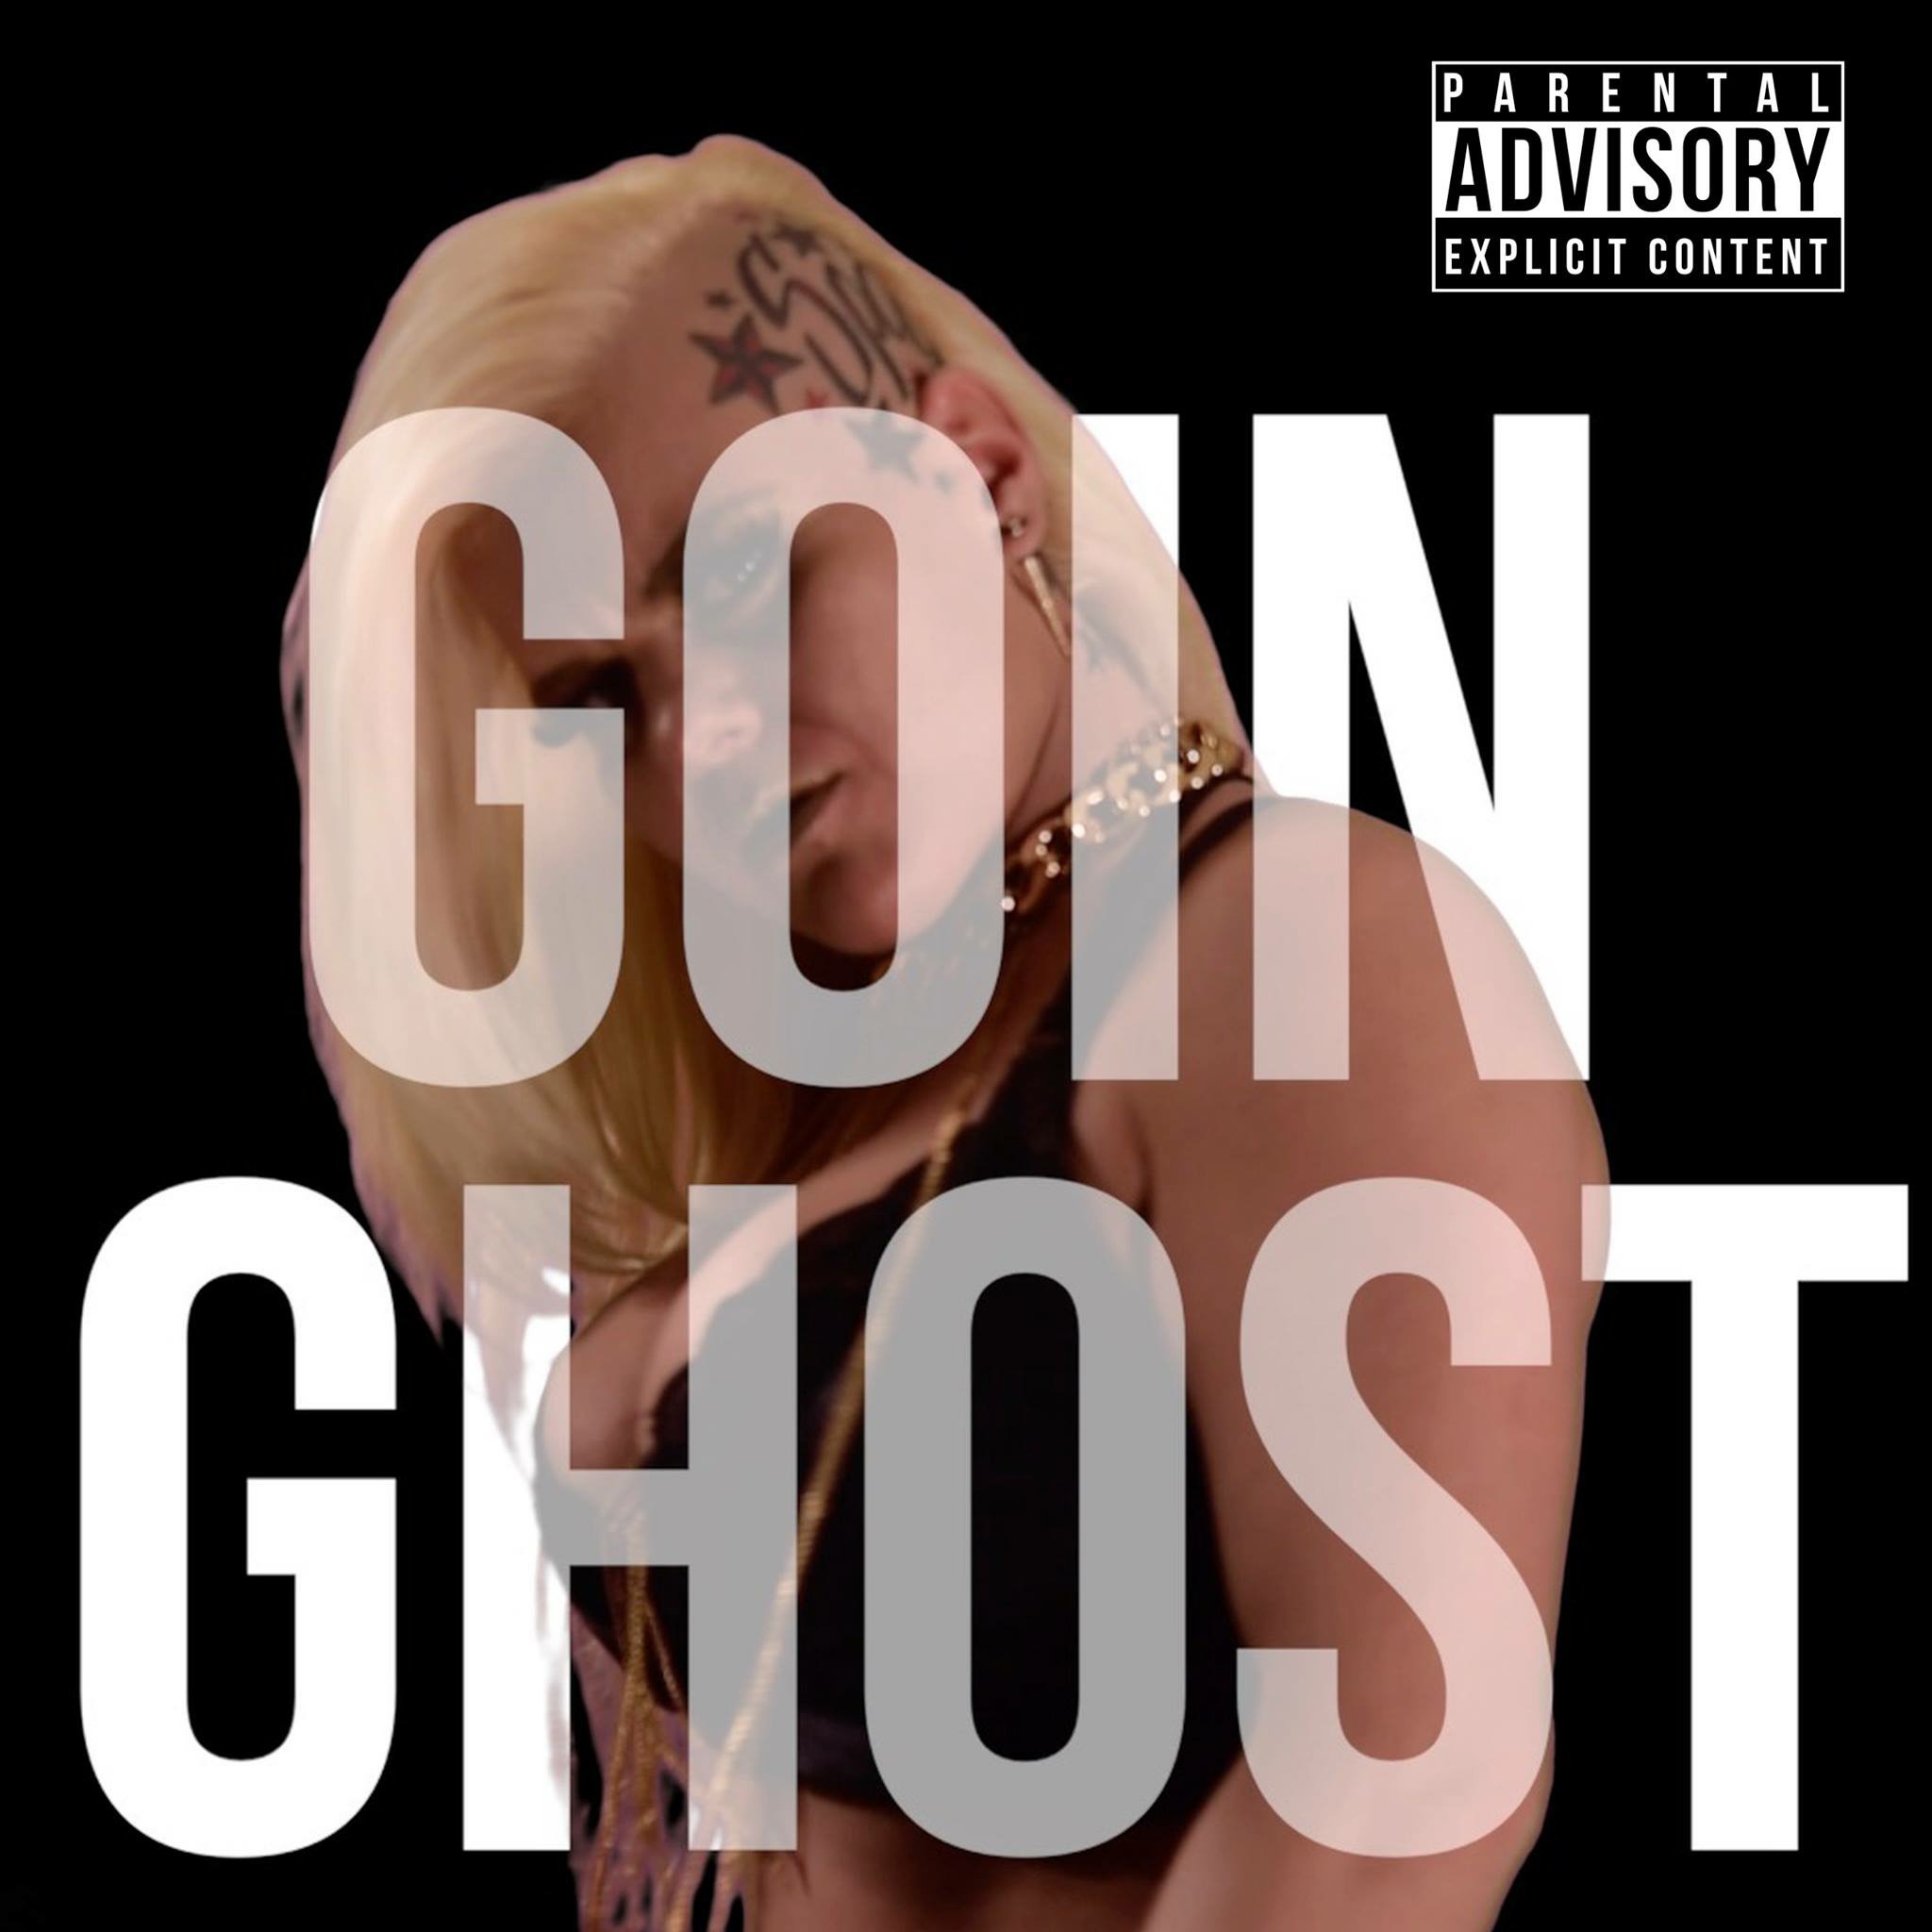 J. Irja – “Goin Ghost” [VIDEO]